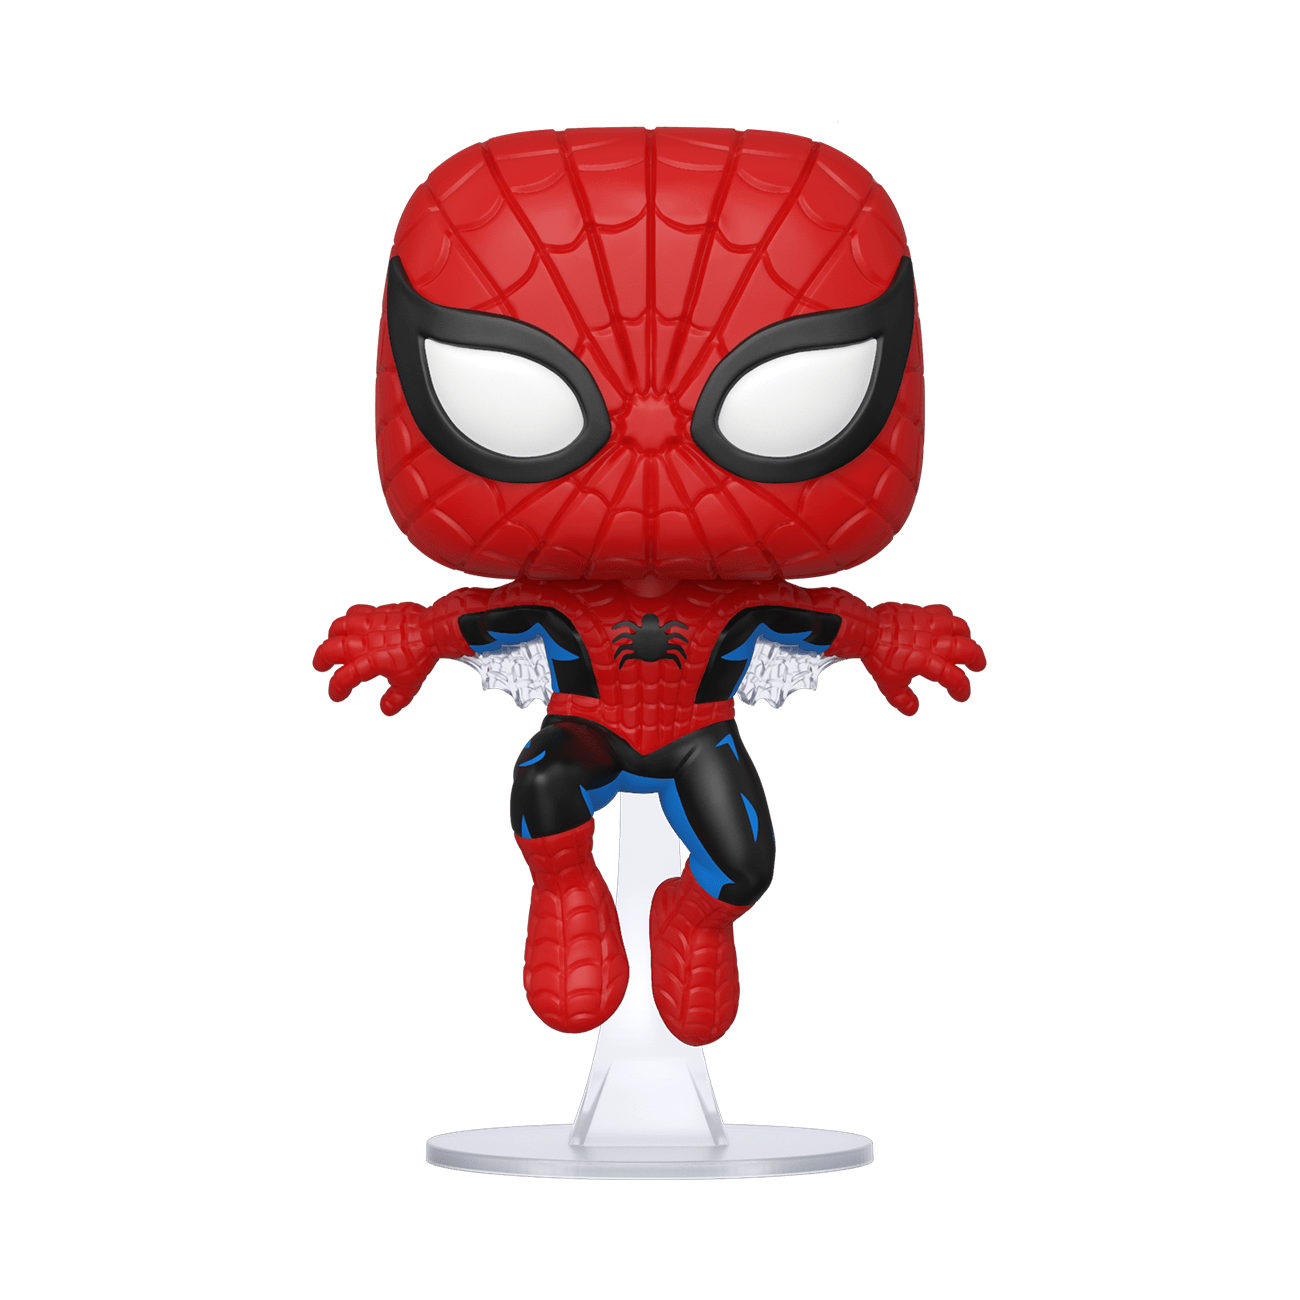 Funko POP! Marvel 80th #593 First Appearance Spider-Man Vinyl Figure